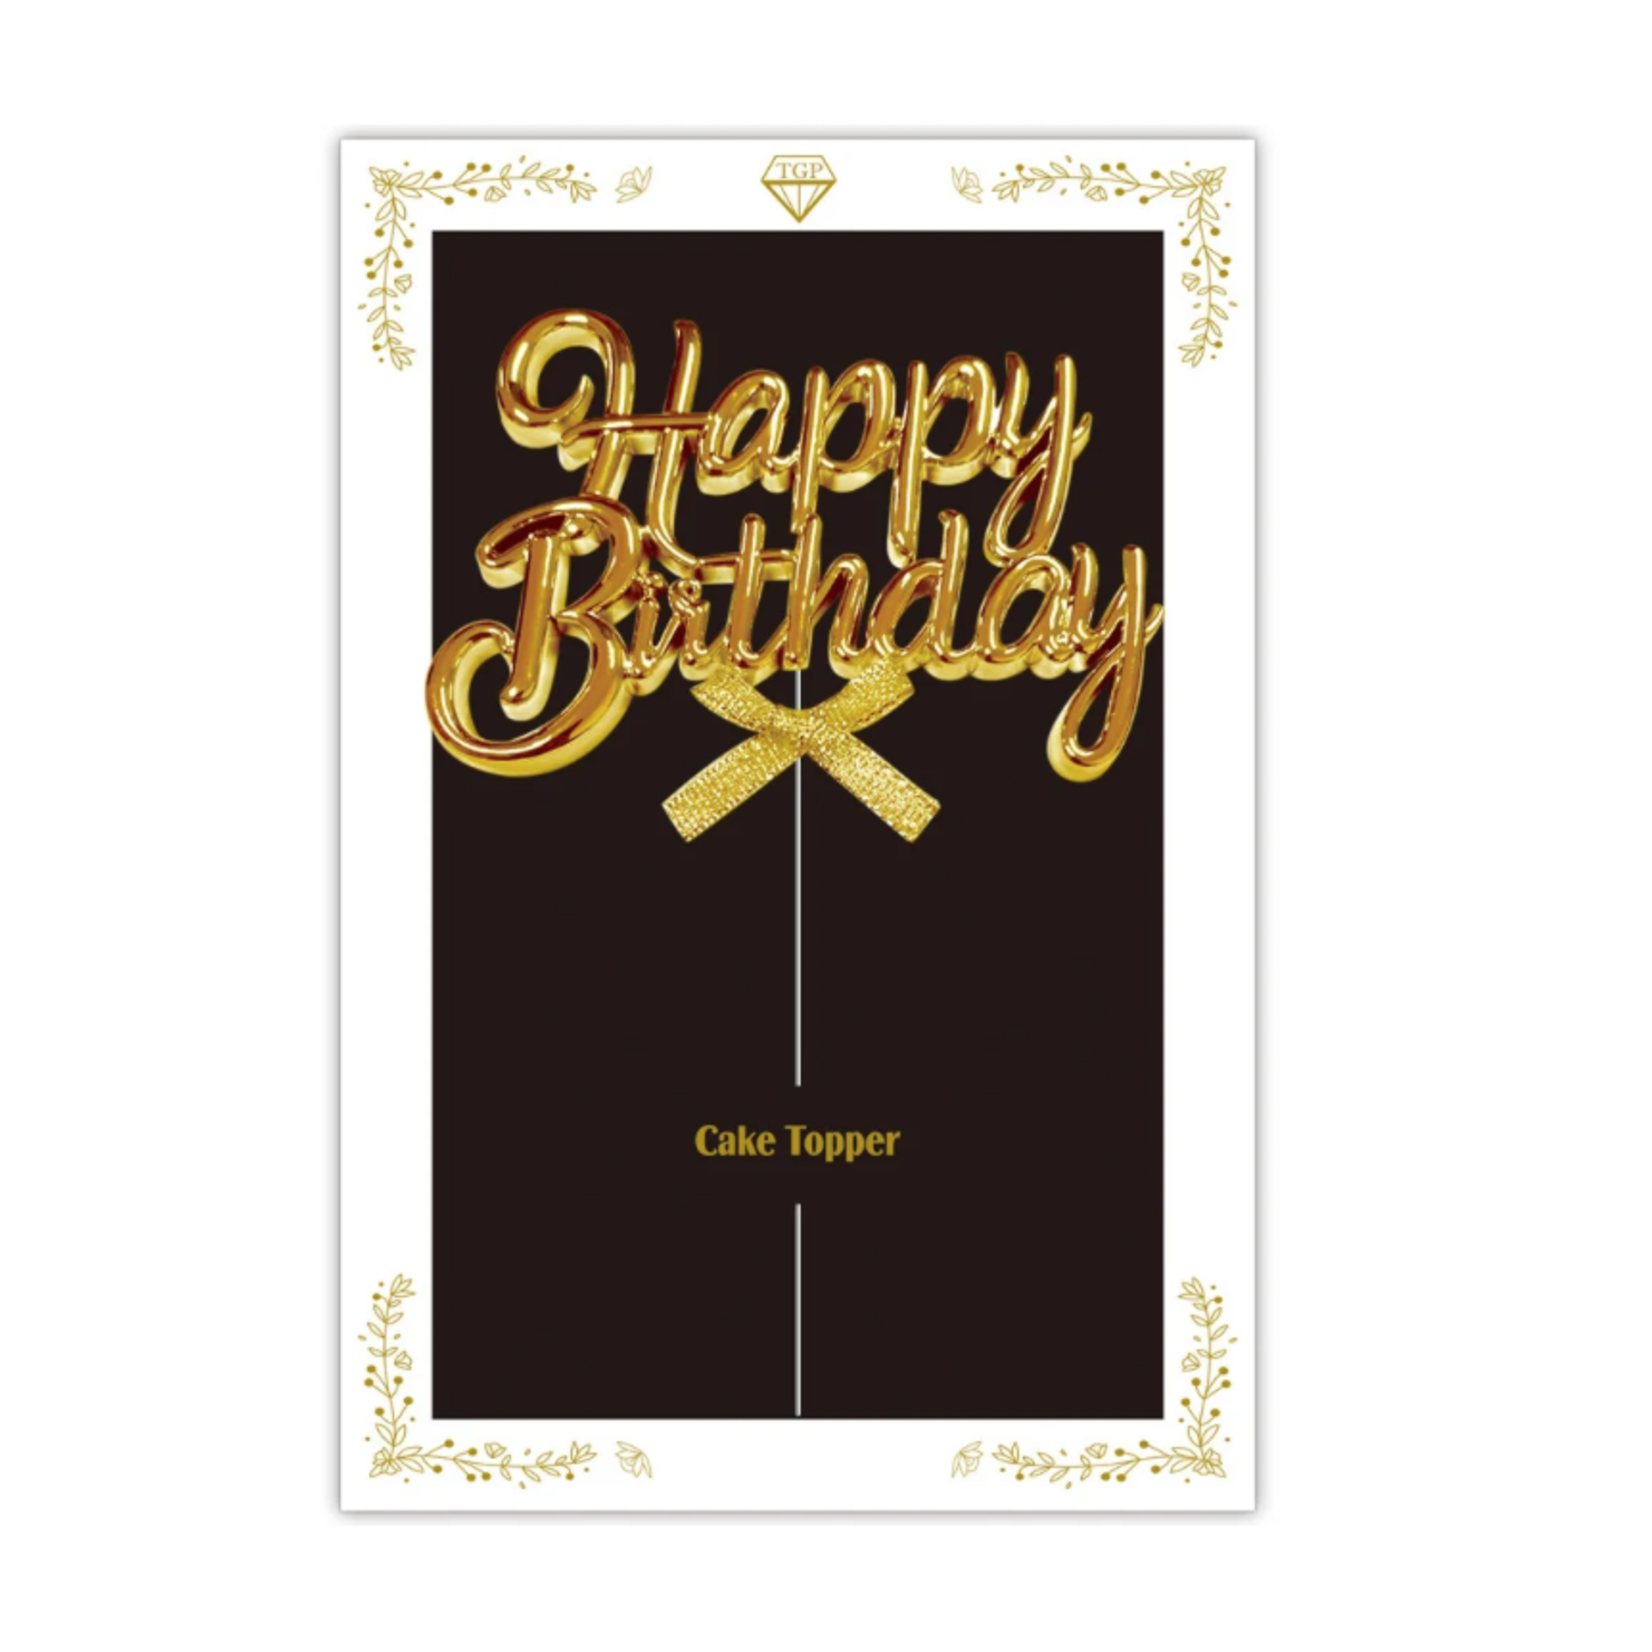 "HAPPY BIRTHDAY" GOLD CAKE TOPPER